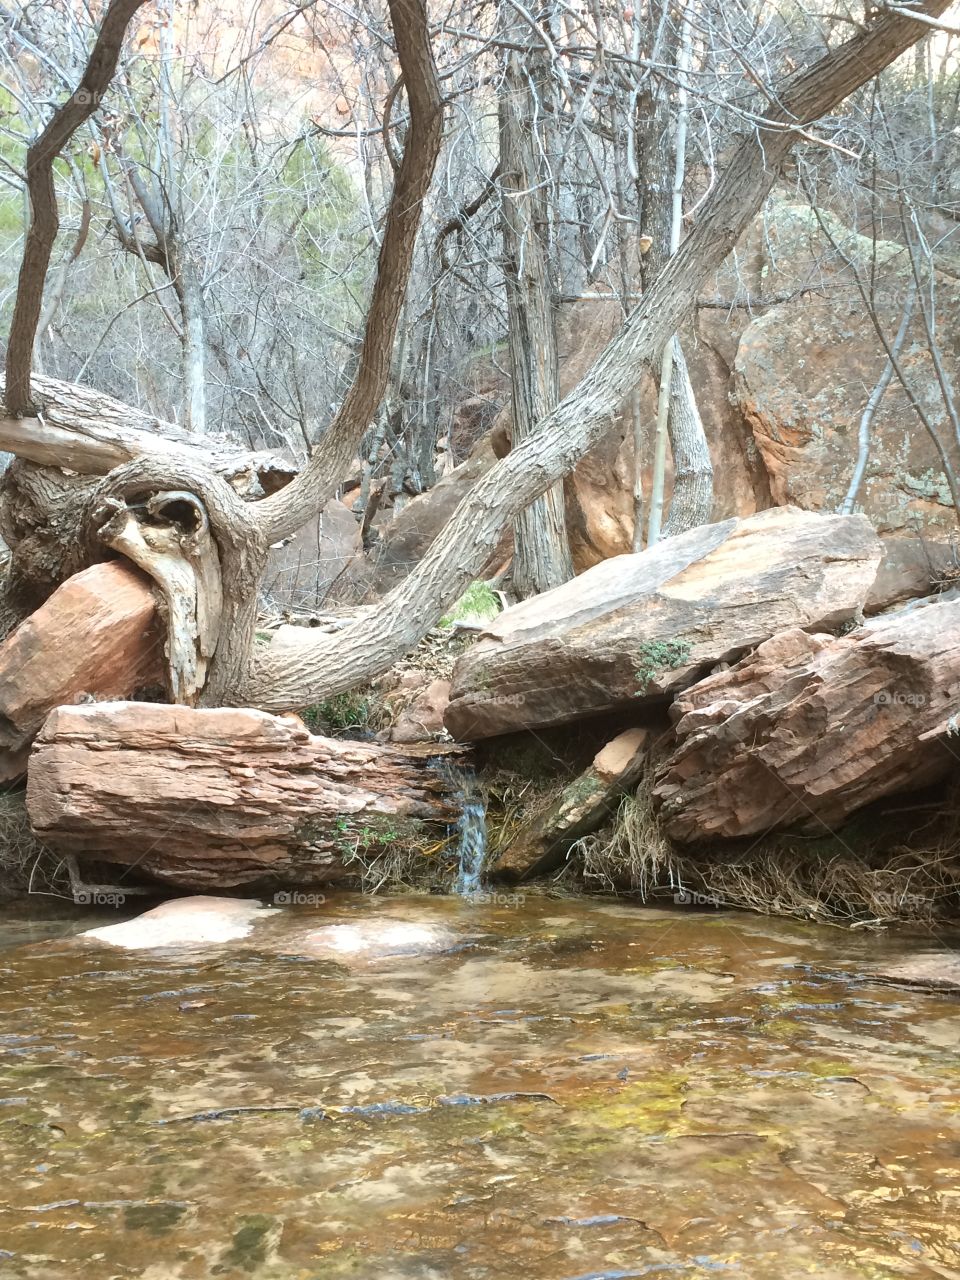 Trickling water, desert rock, gnarled tree